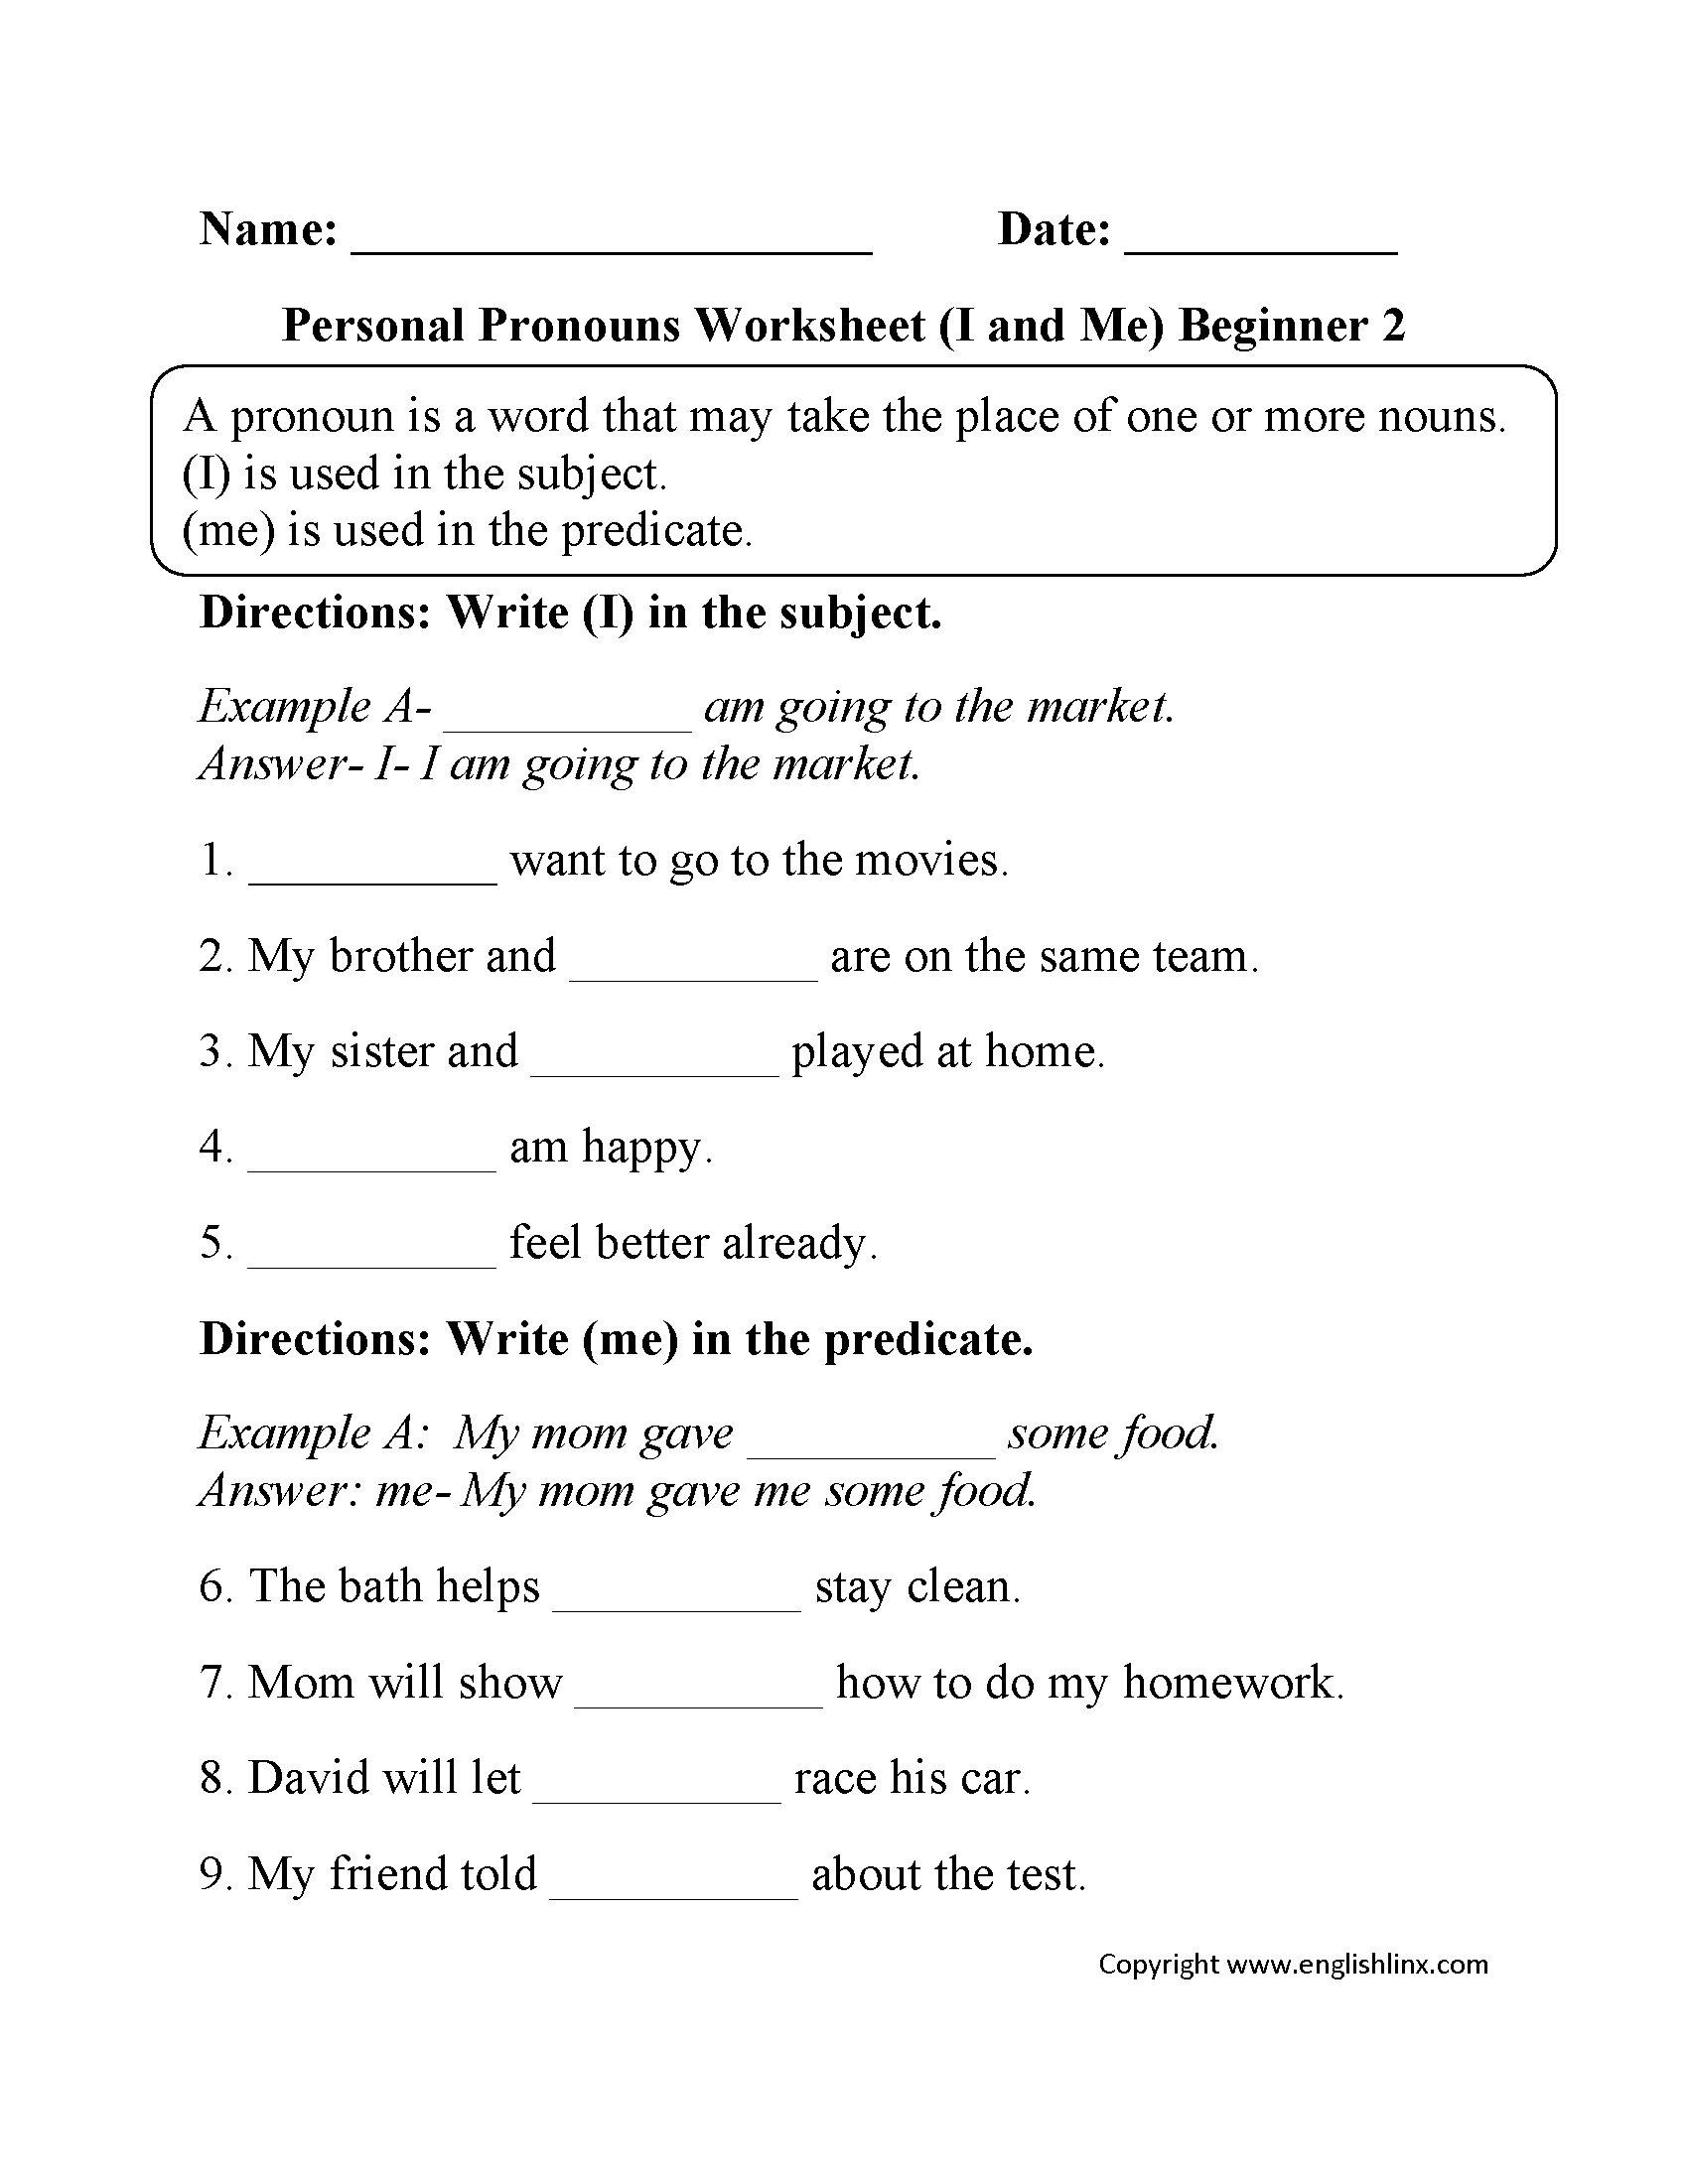 grade-3-pronoun-worksheets-free-printables-worksheets